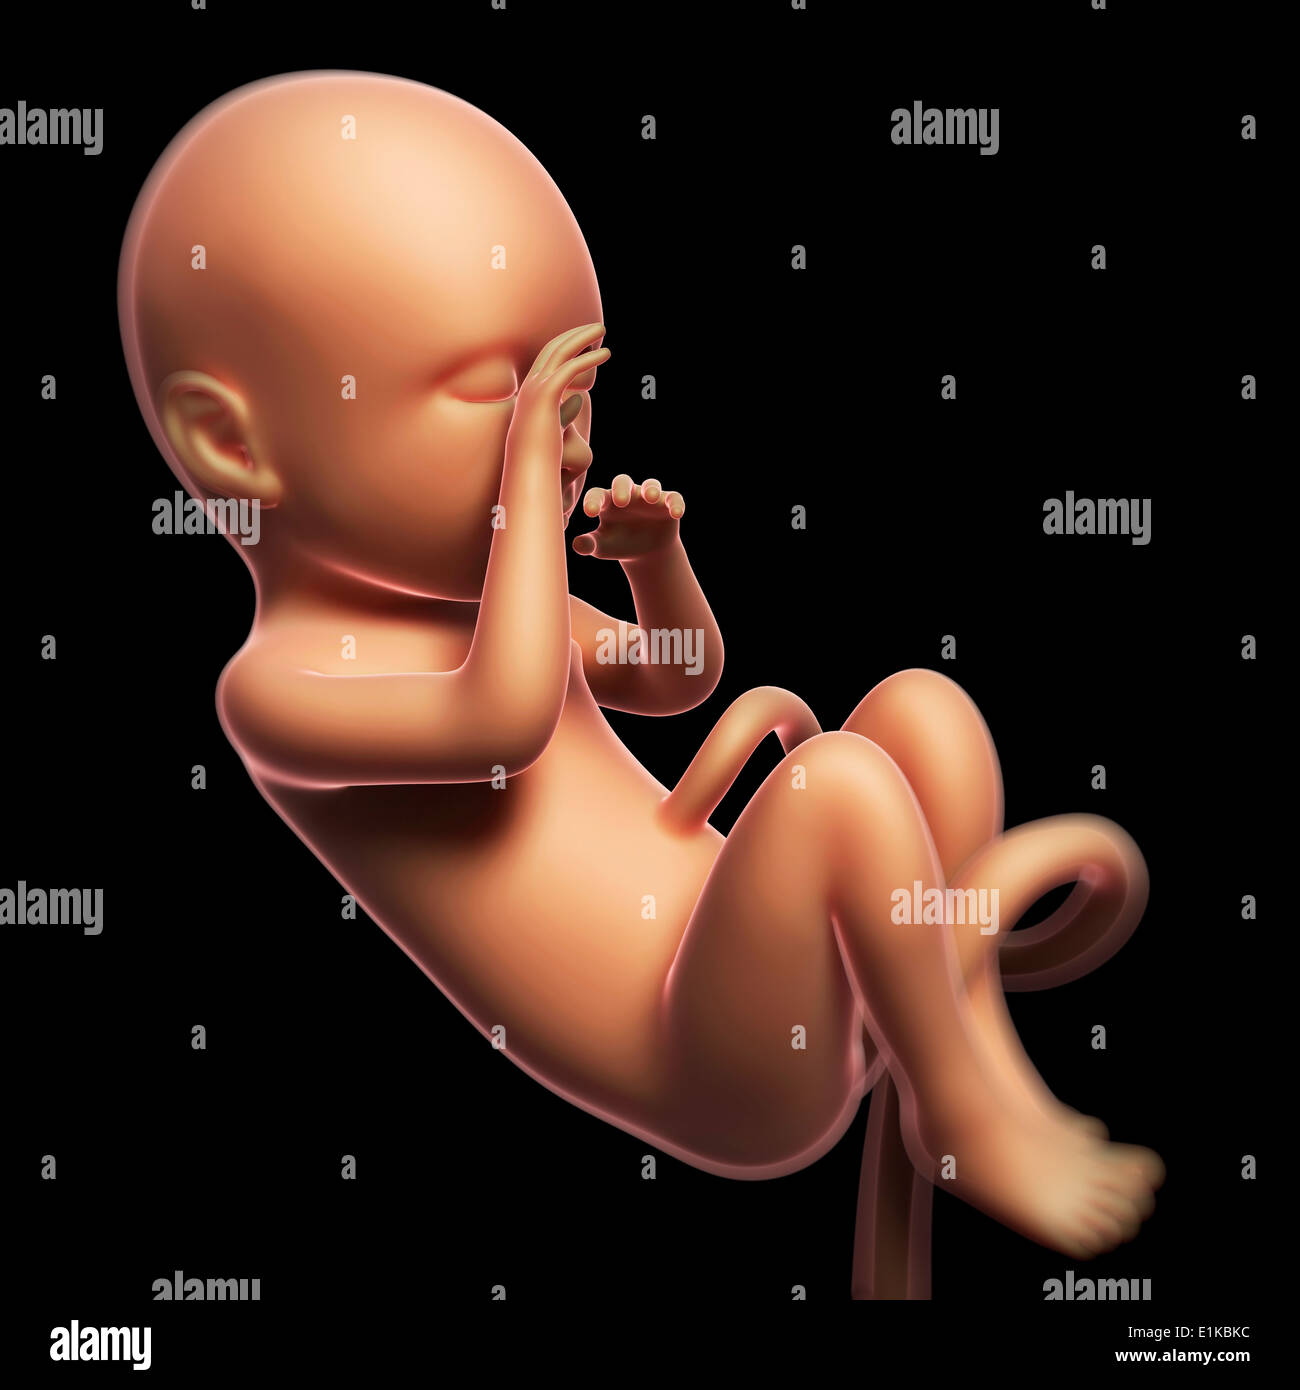 Foetus at 9 months computer artwork. Stock Photo